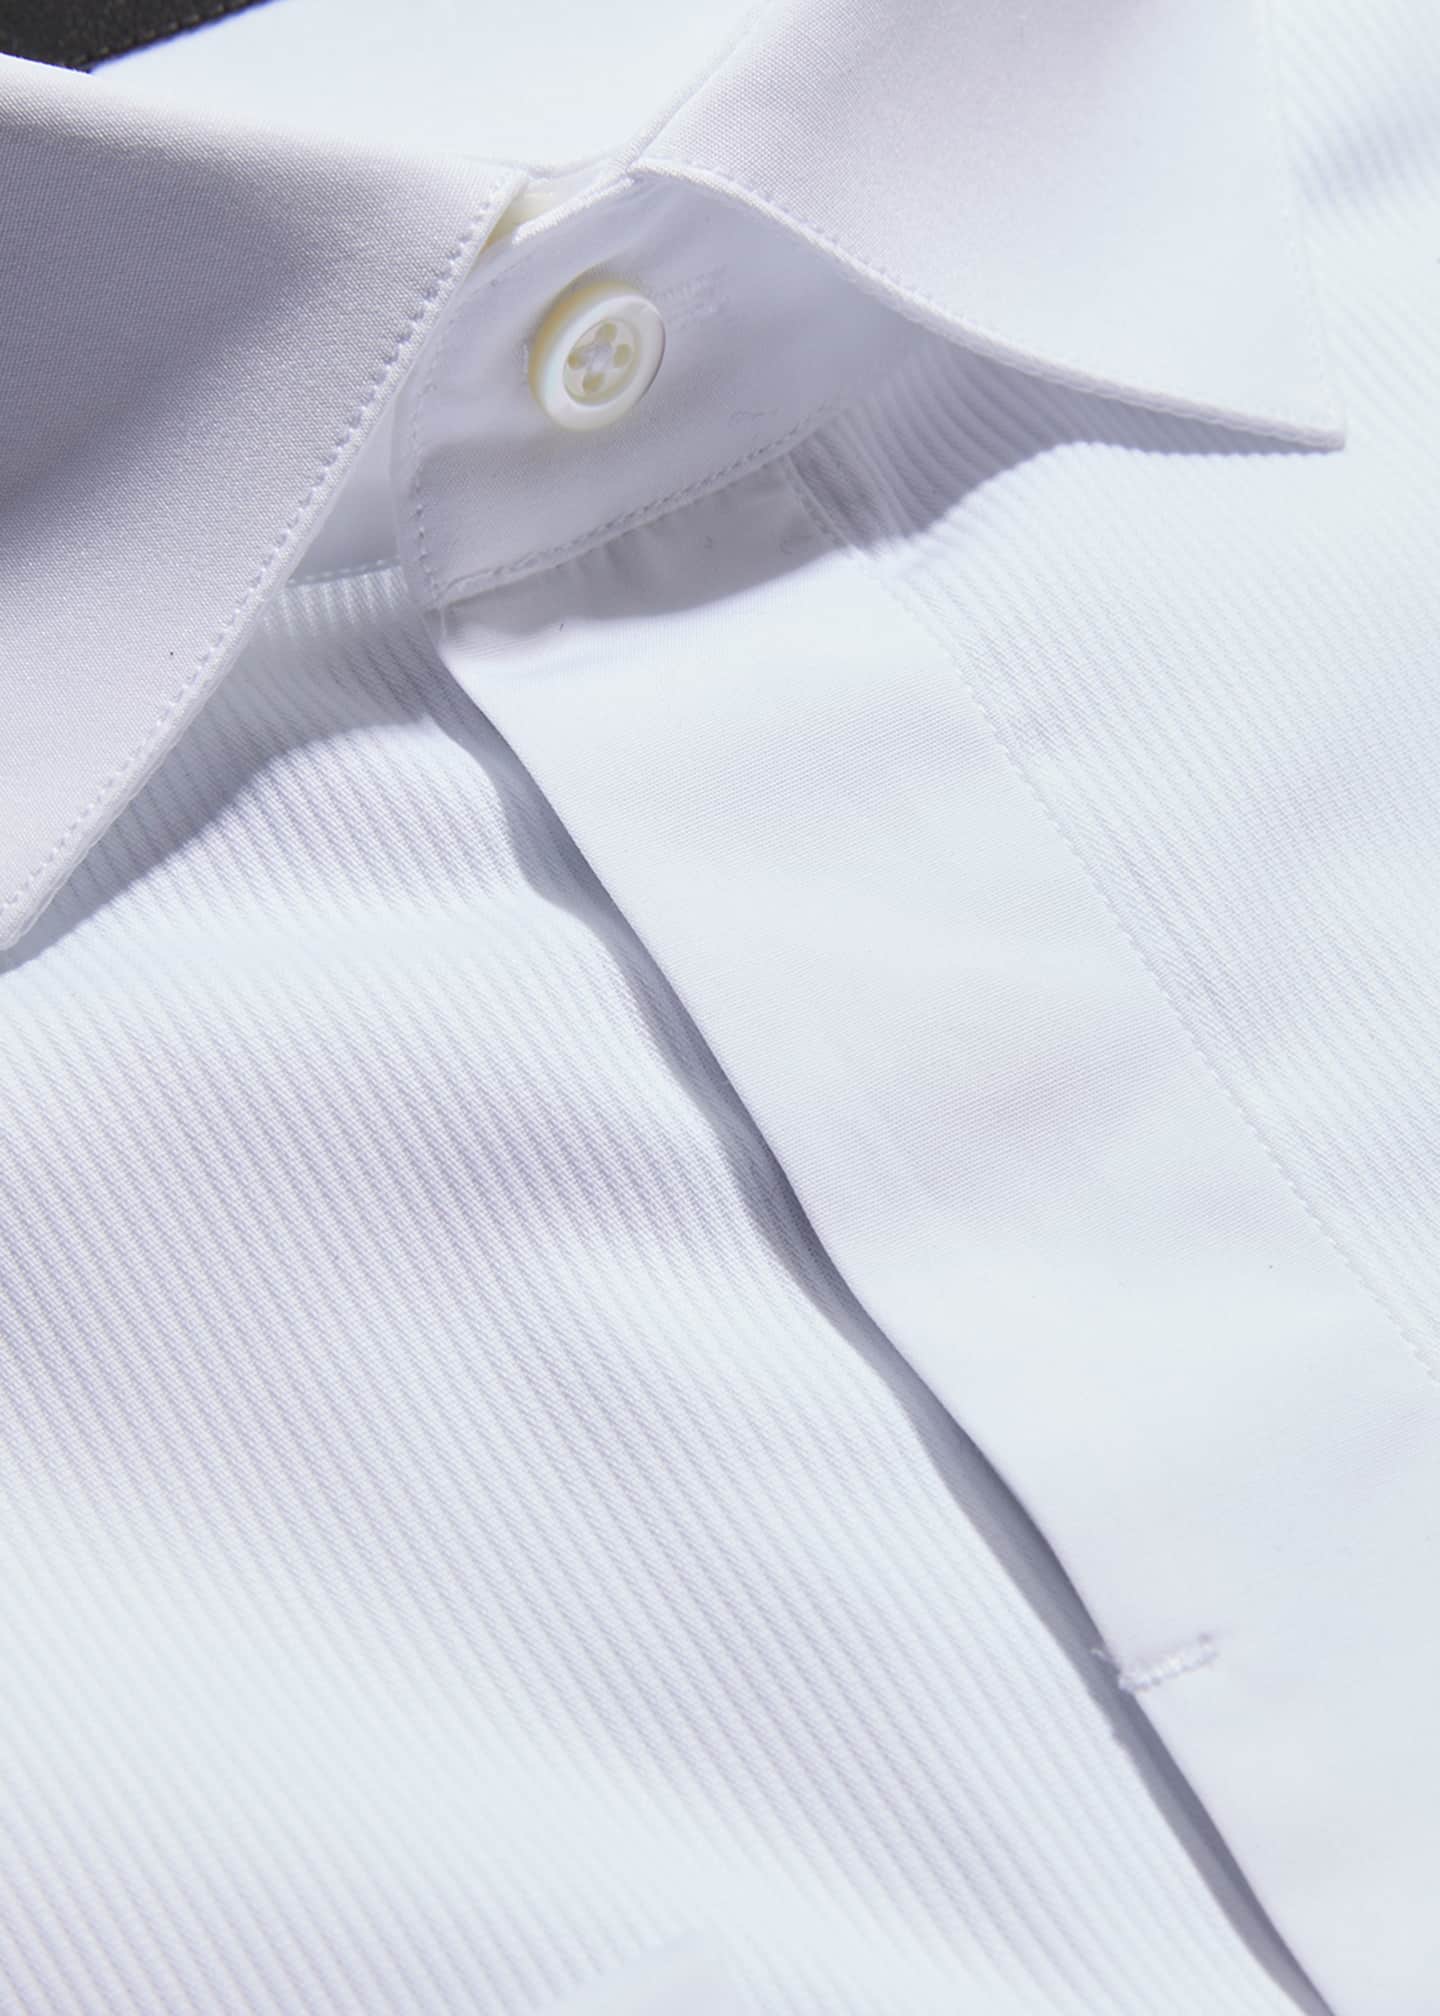 Emporio Armani Men's French Cuff Tuxedo Shirt - Bergdorf Goodman